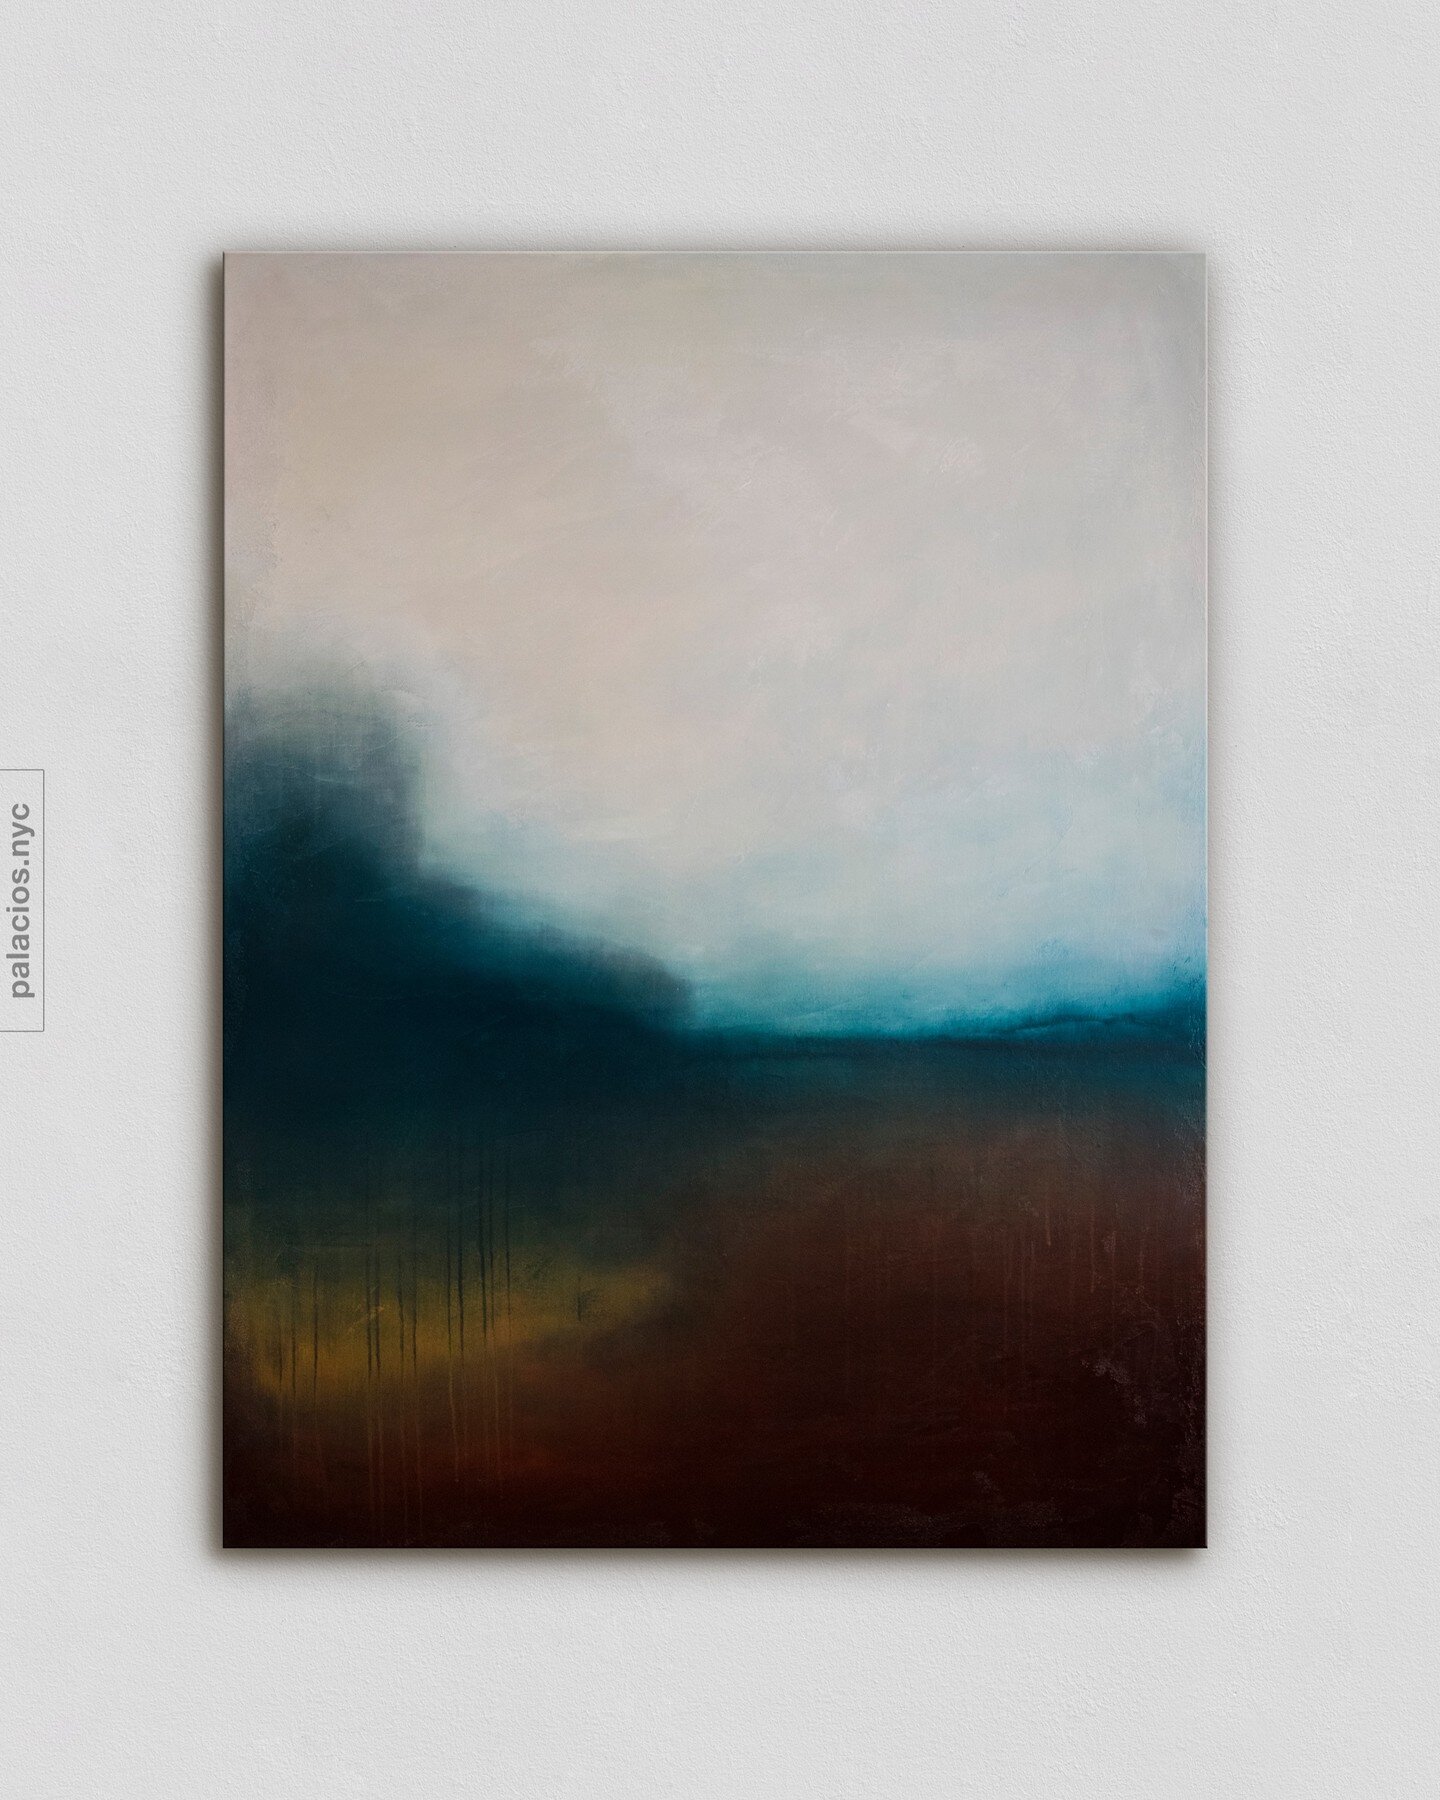 '642'
Mixed Media on Canvas
91cm x 122cm

#abstractlandscape #abstractpainting #abstractart #bluelandscape #artistoninstagram #abstractartist